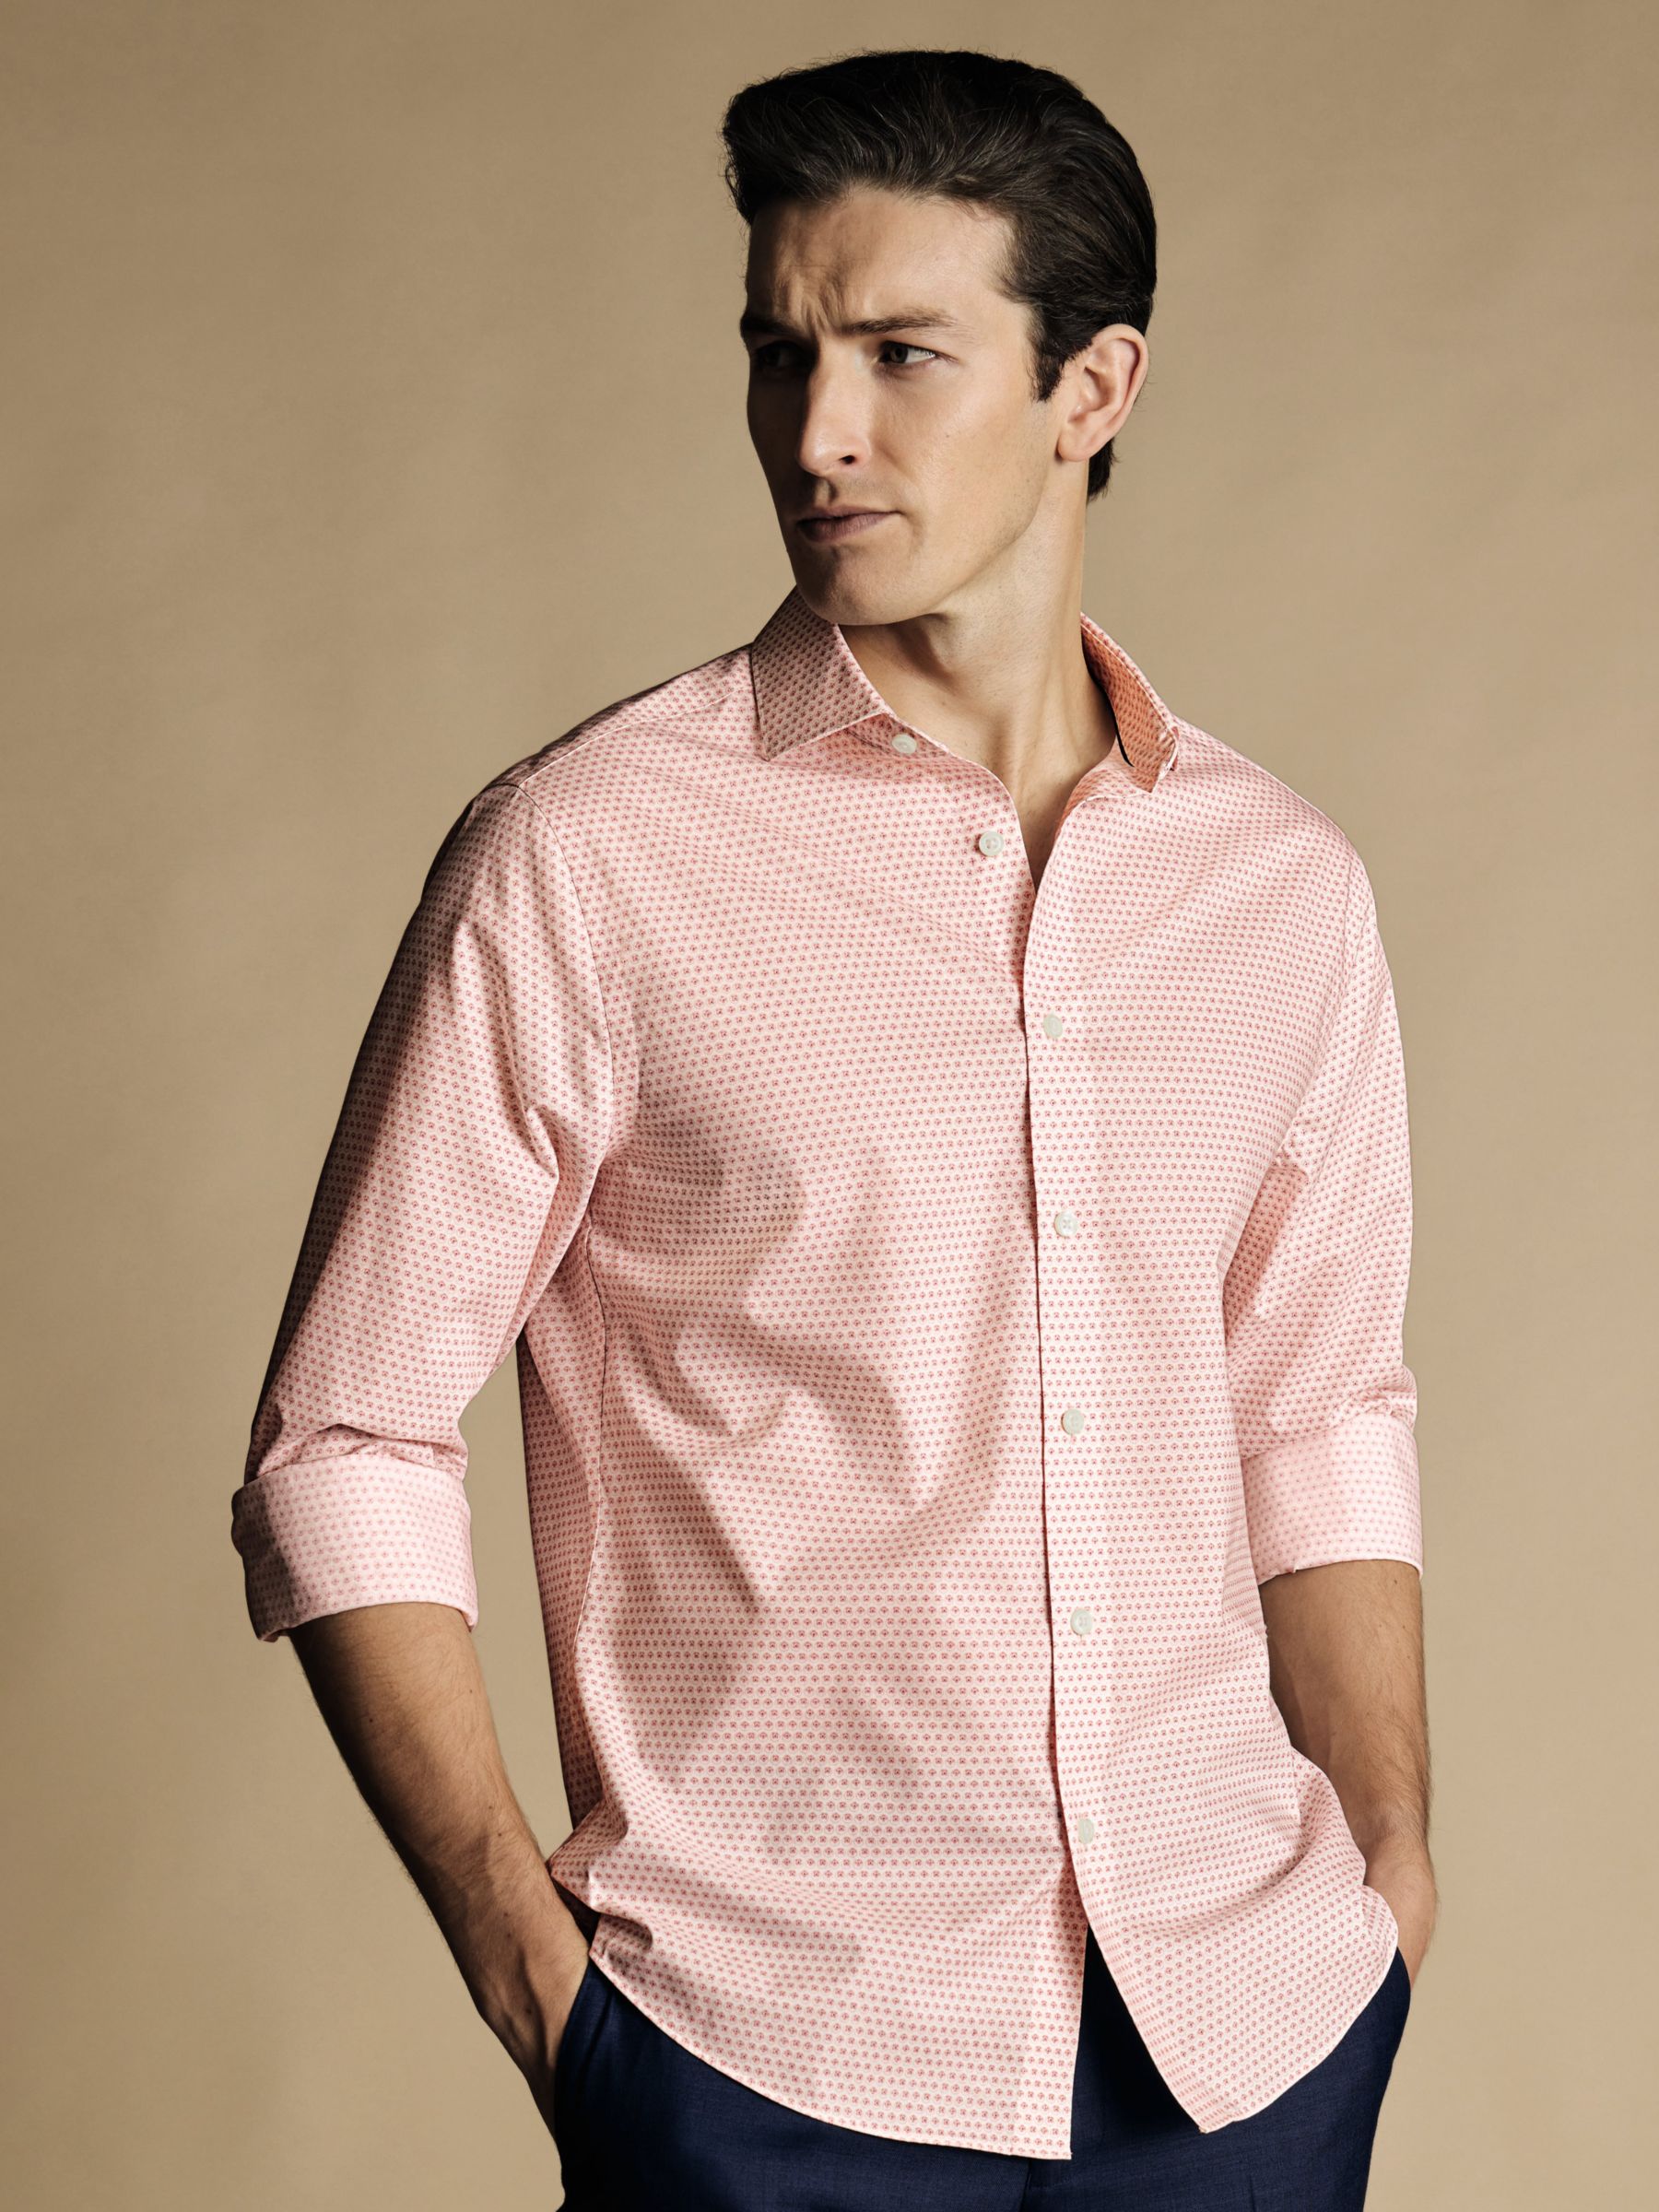 Charles Tyrwhitt Floral Geometric Print Non-Iron Slim Fit Shirt, Pink, XXL